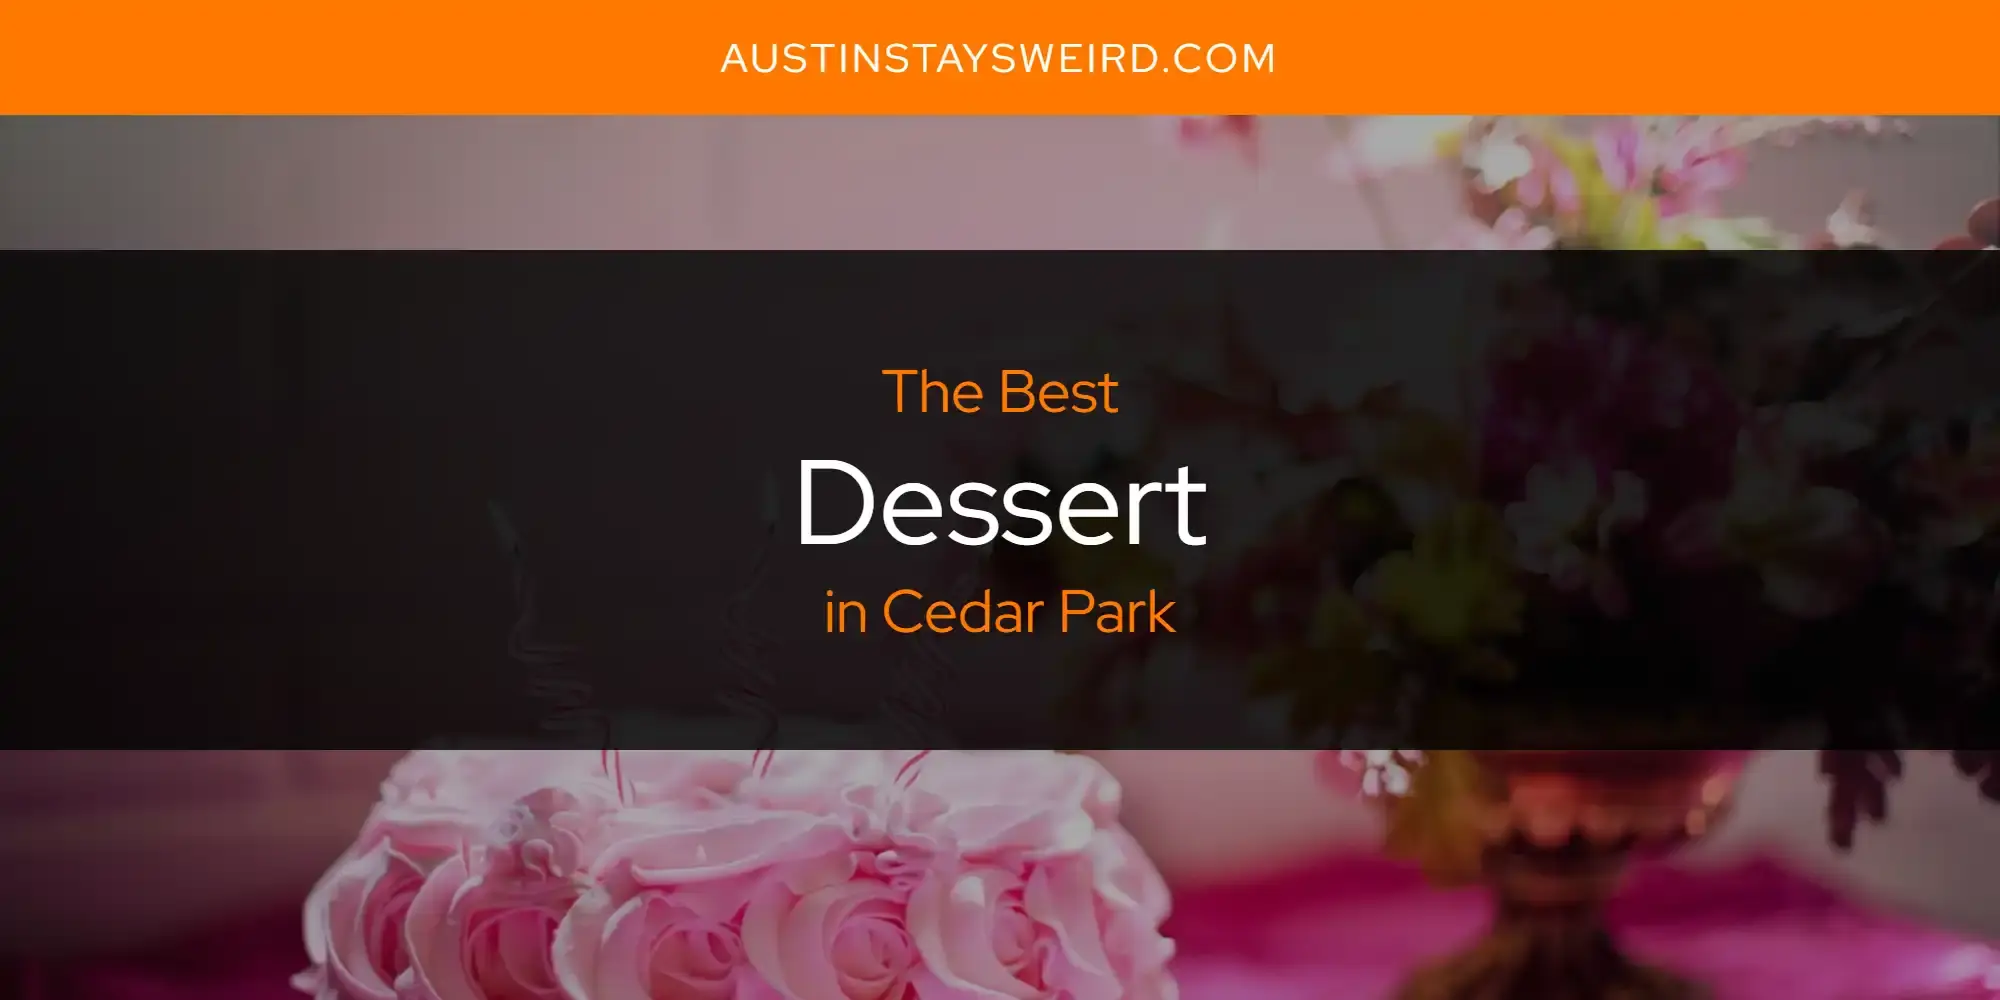 Best Dessert in Cedar Park? Here's the Top 8